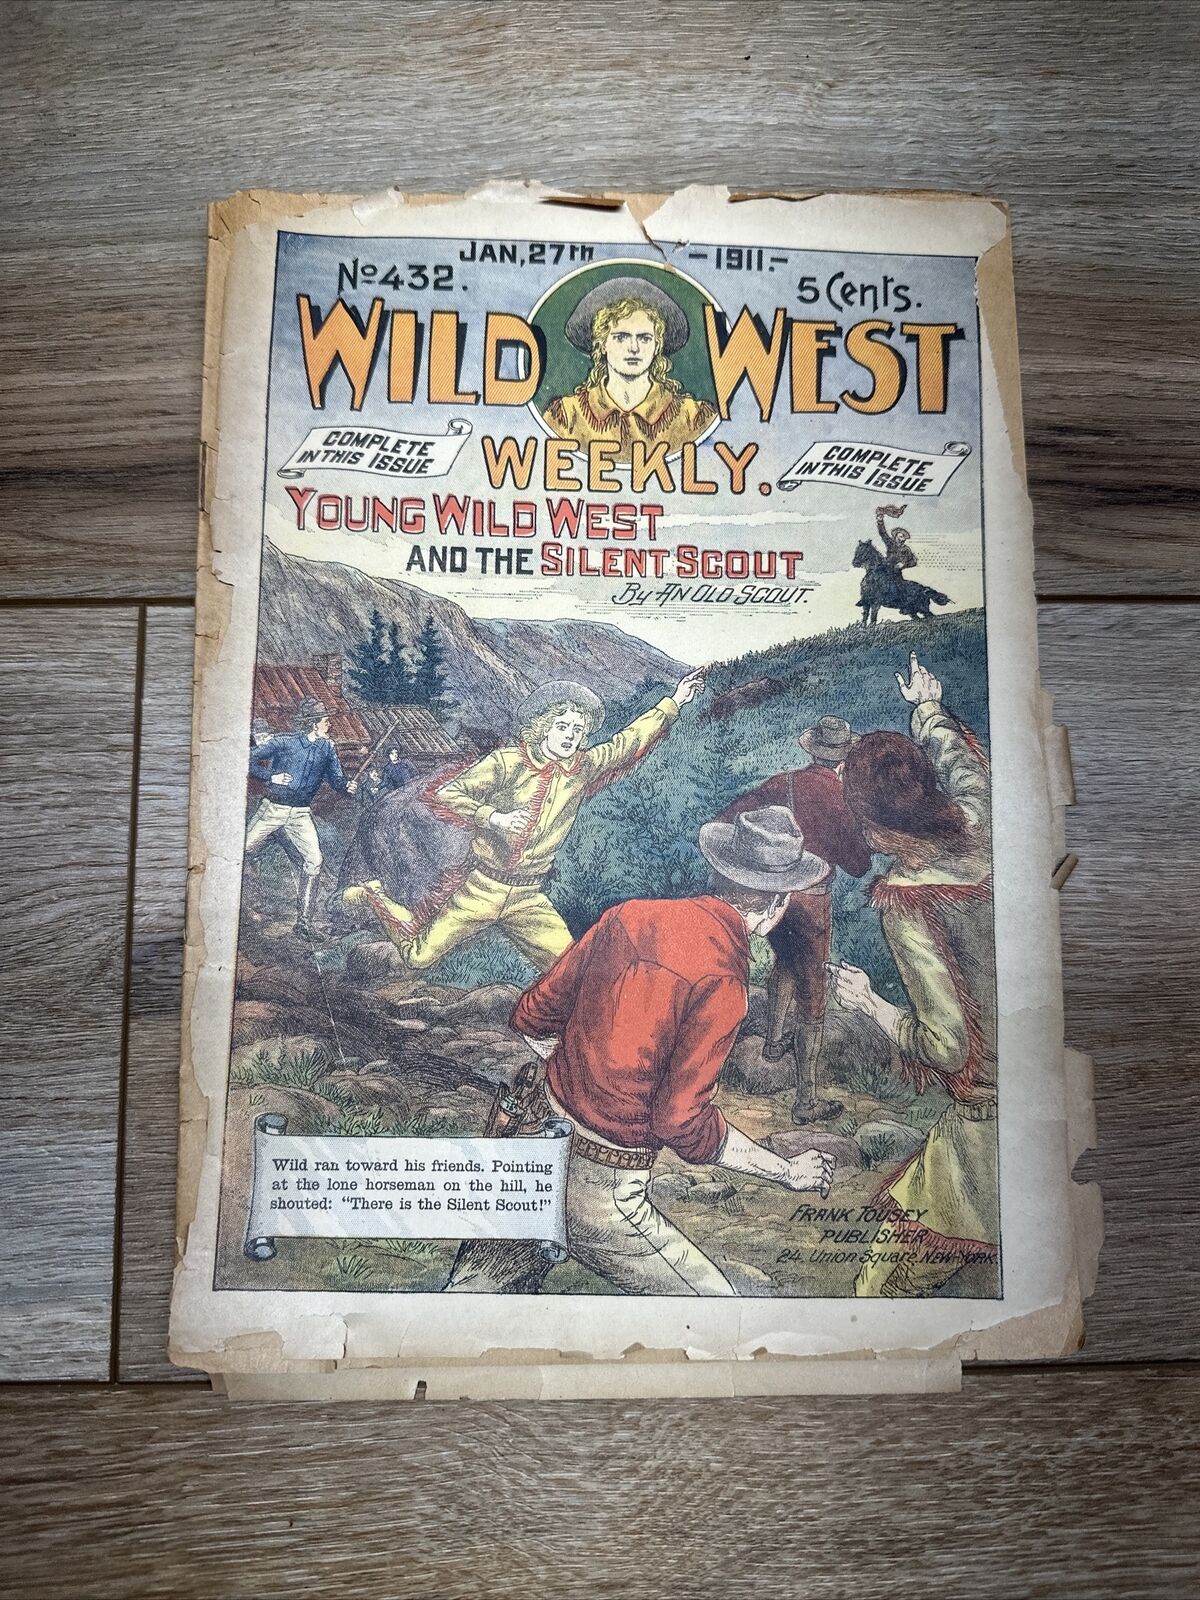 Wild West Weekly #432 Pulp Magazine Jan, 27th 1911 Good- Complete Stories etc